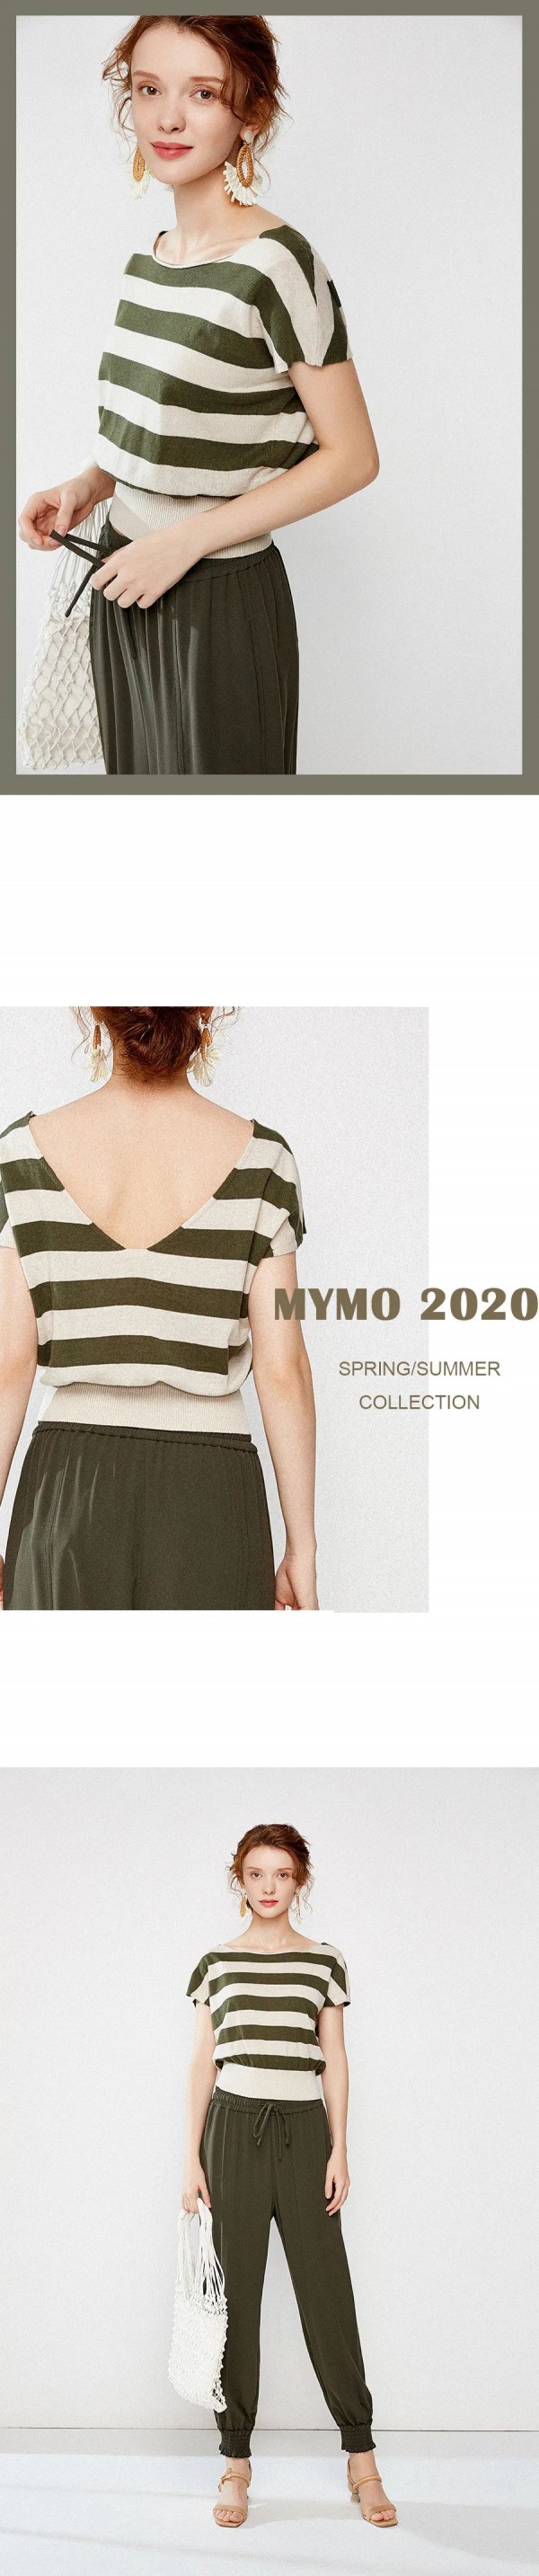 MYMO女装品牌2020夏季新品 释放束缚